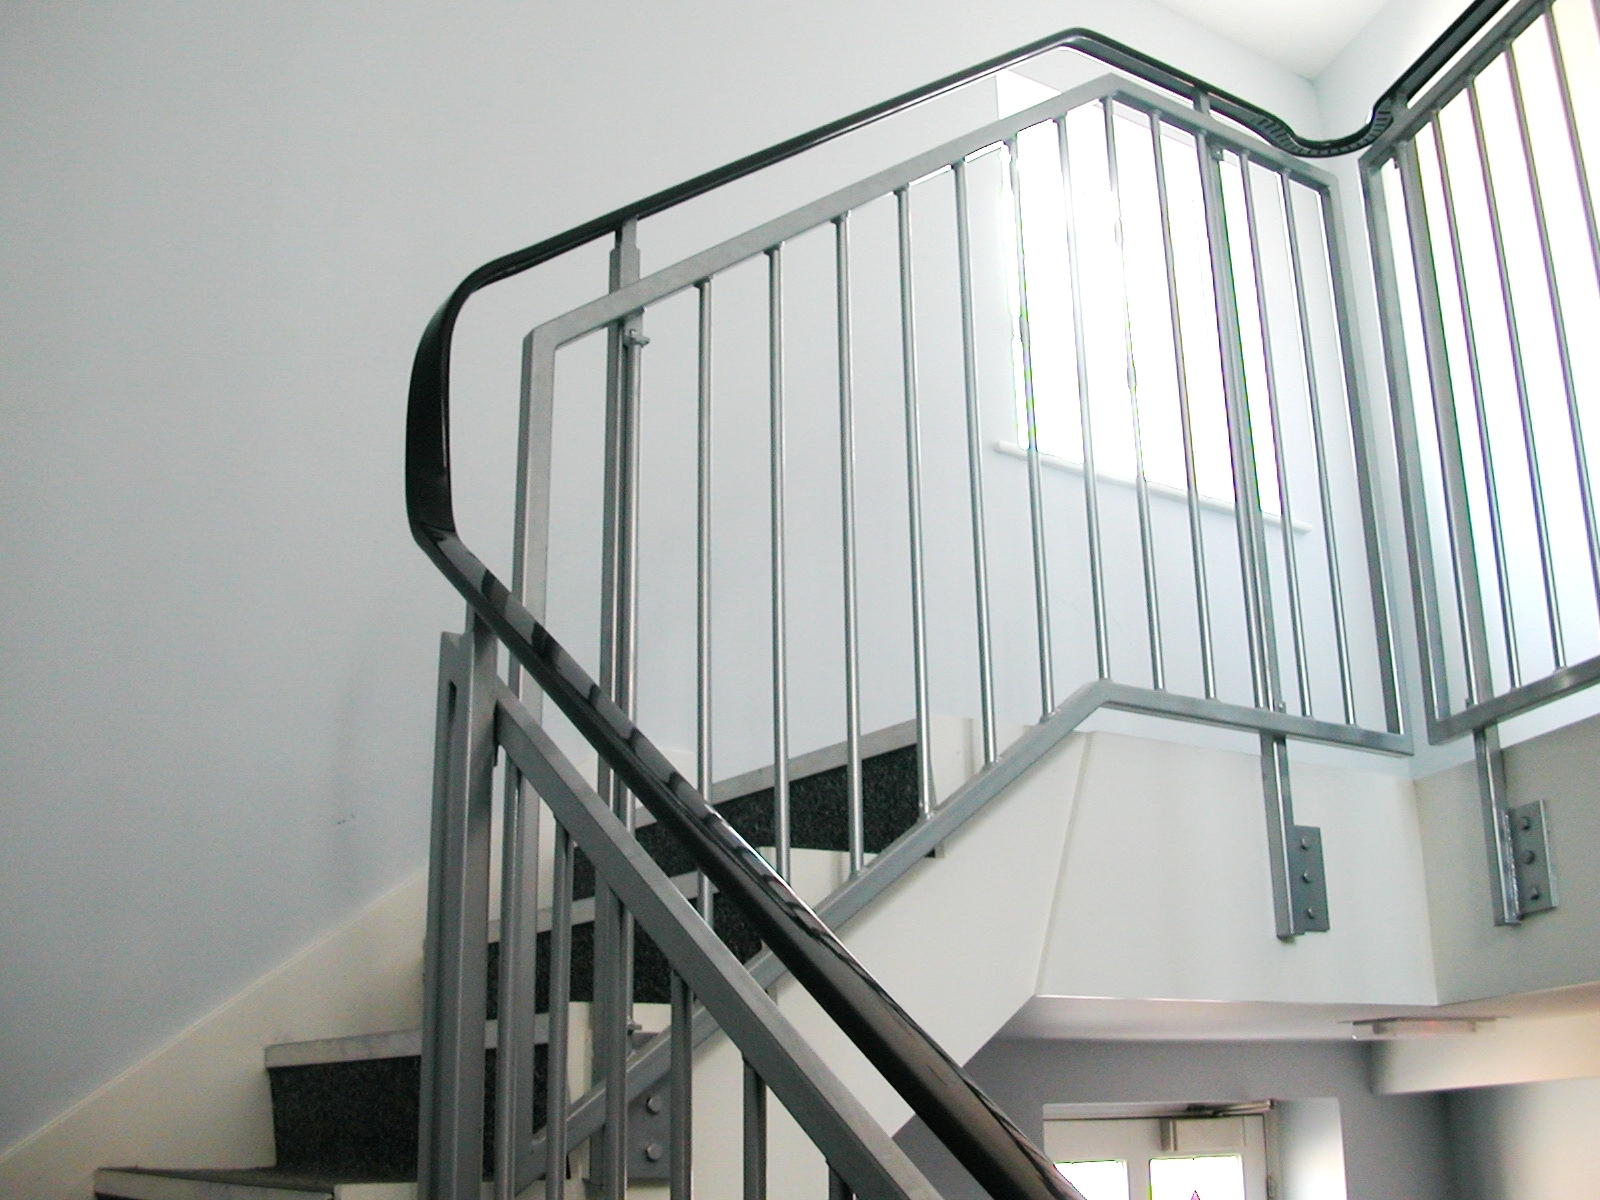 Mild Steel Vertical Bar Stair Balustrade with Plastic Handrails